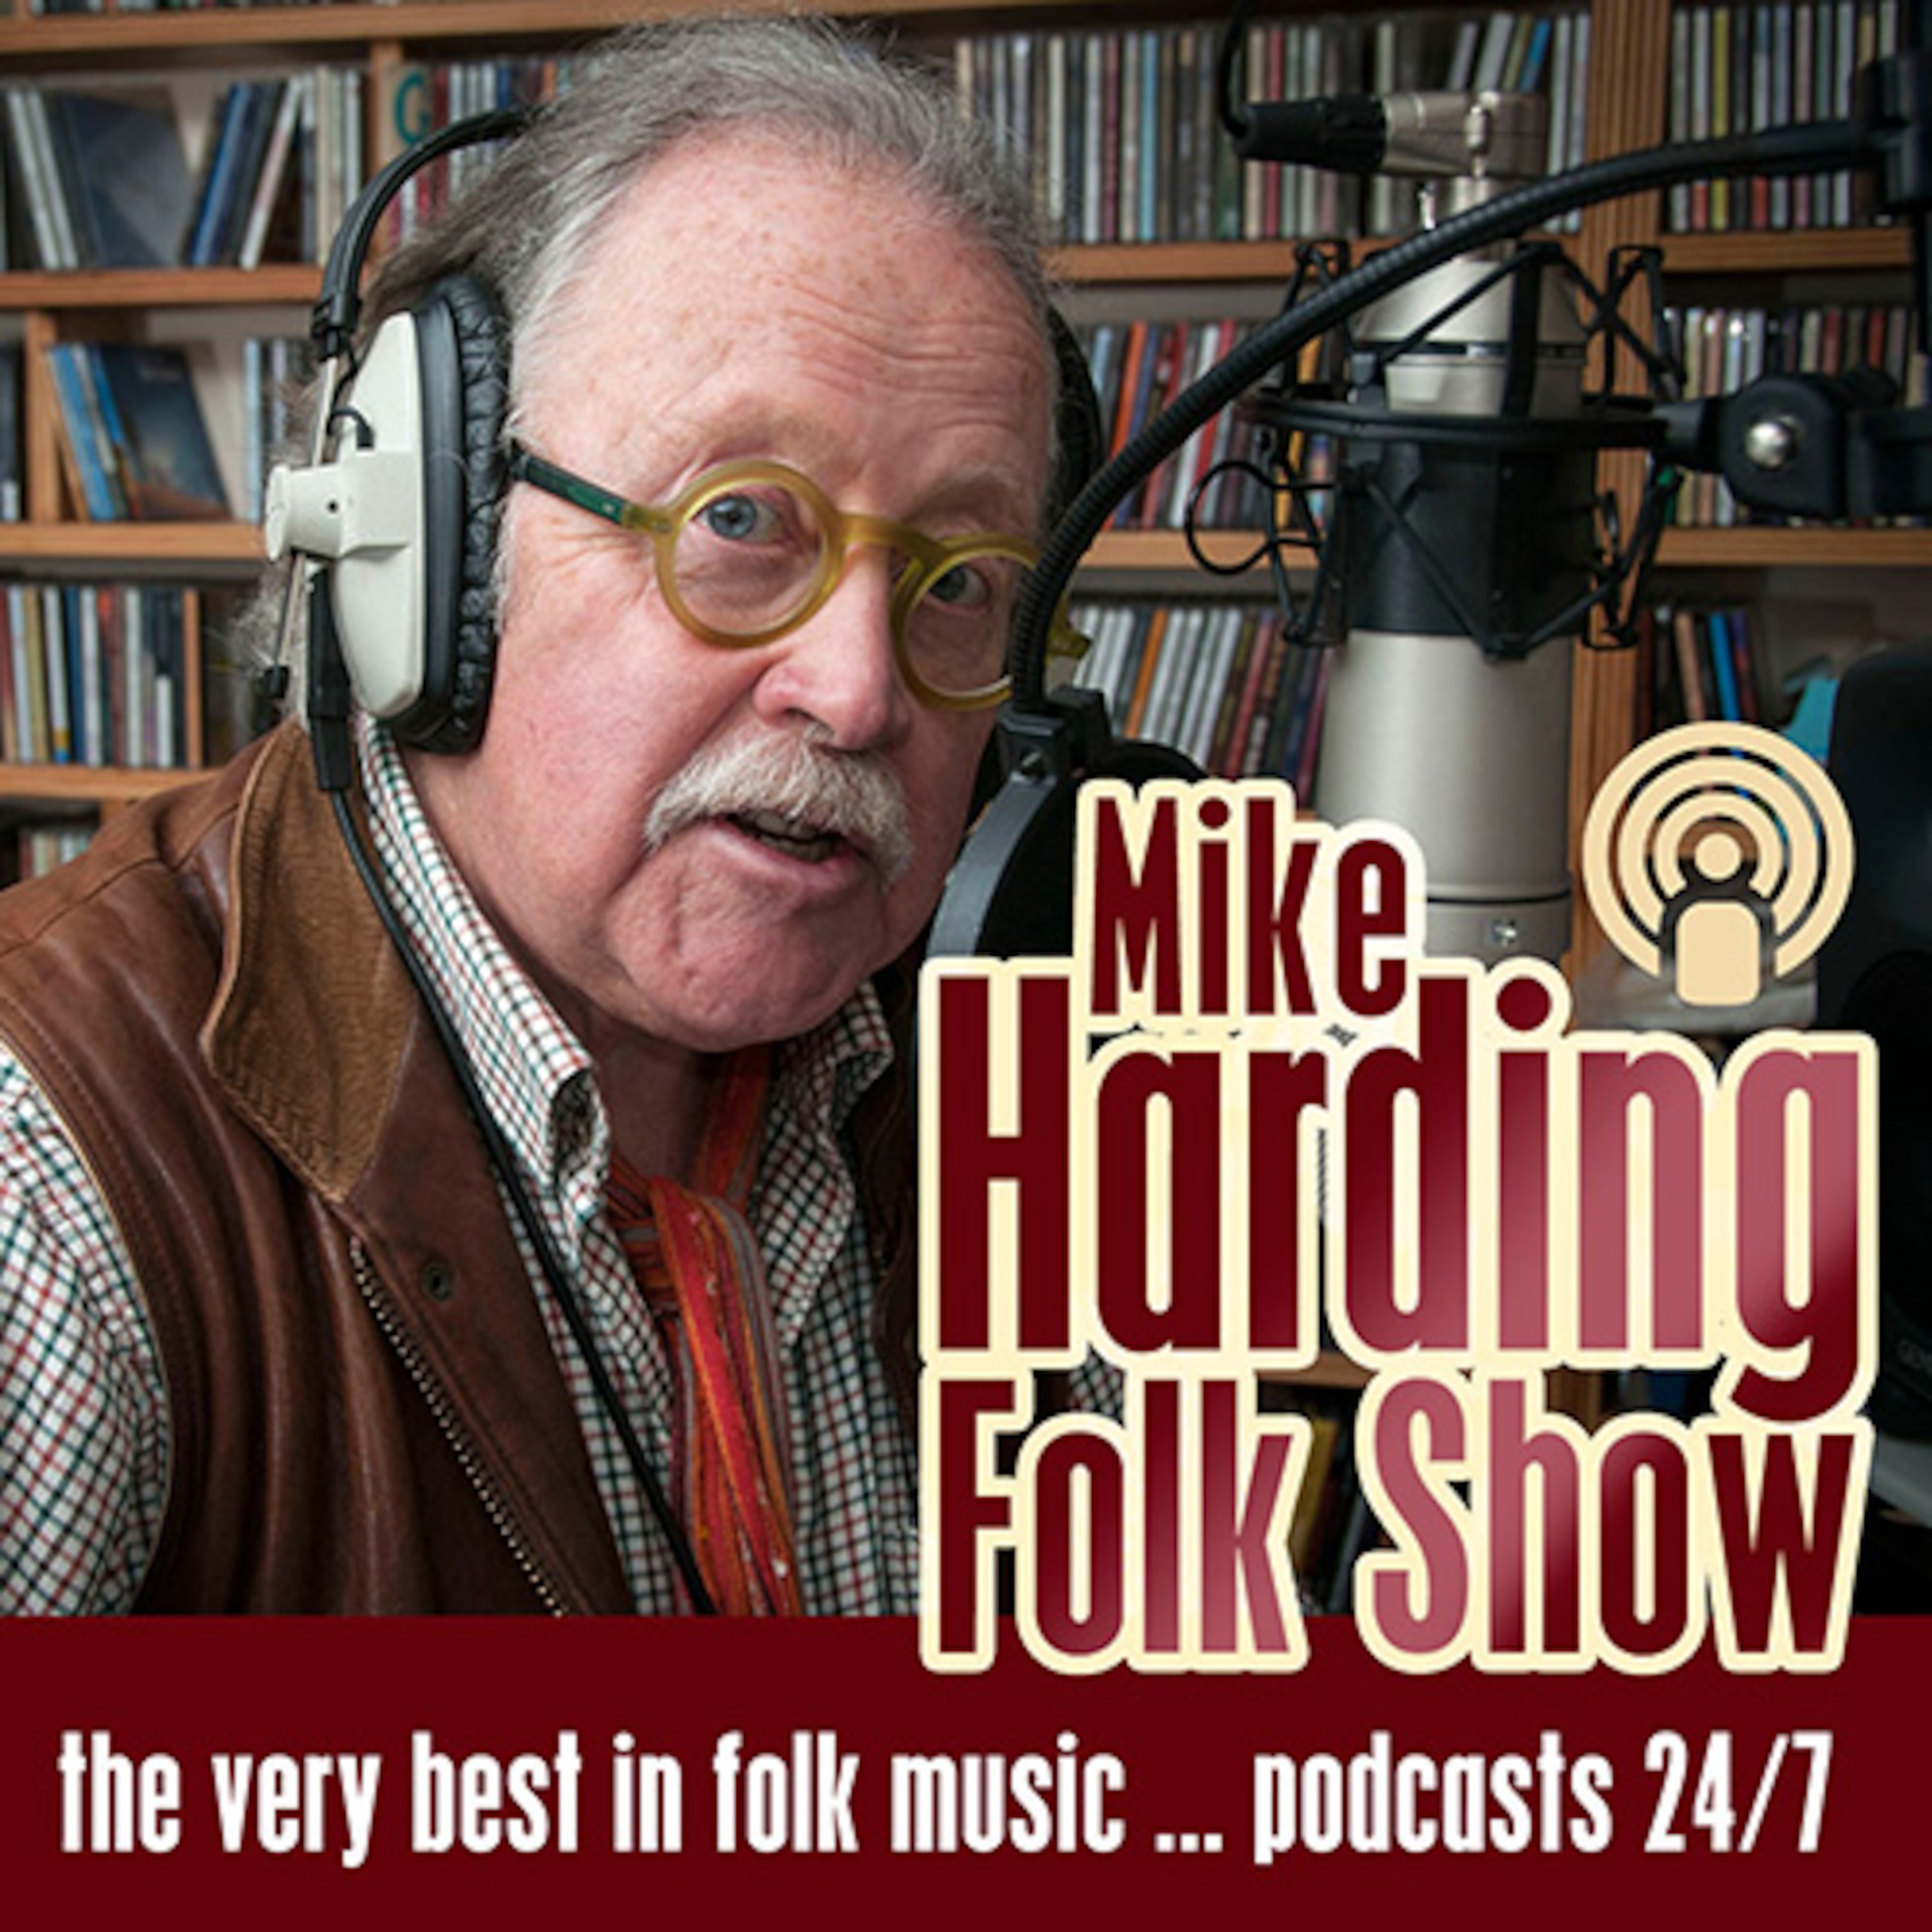 Mike Harding Folk Show 161